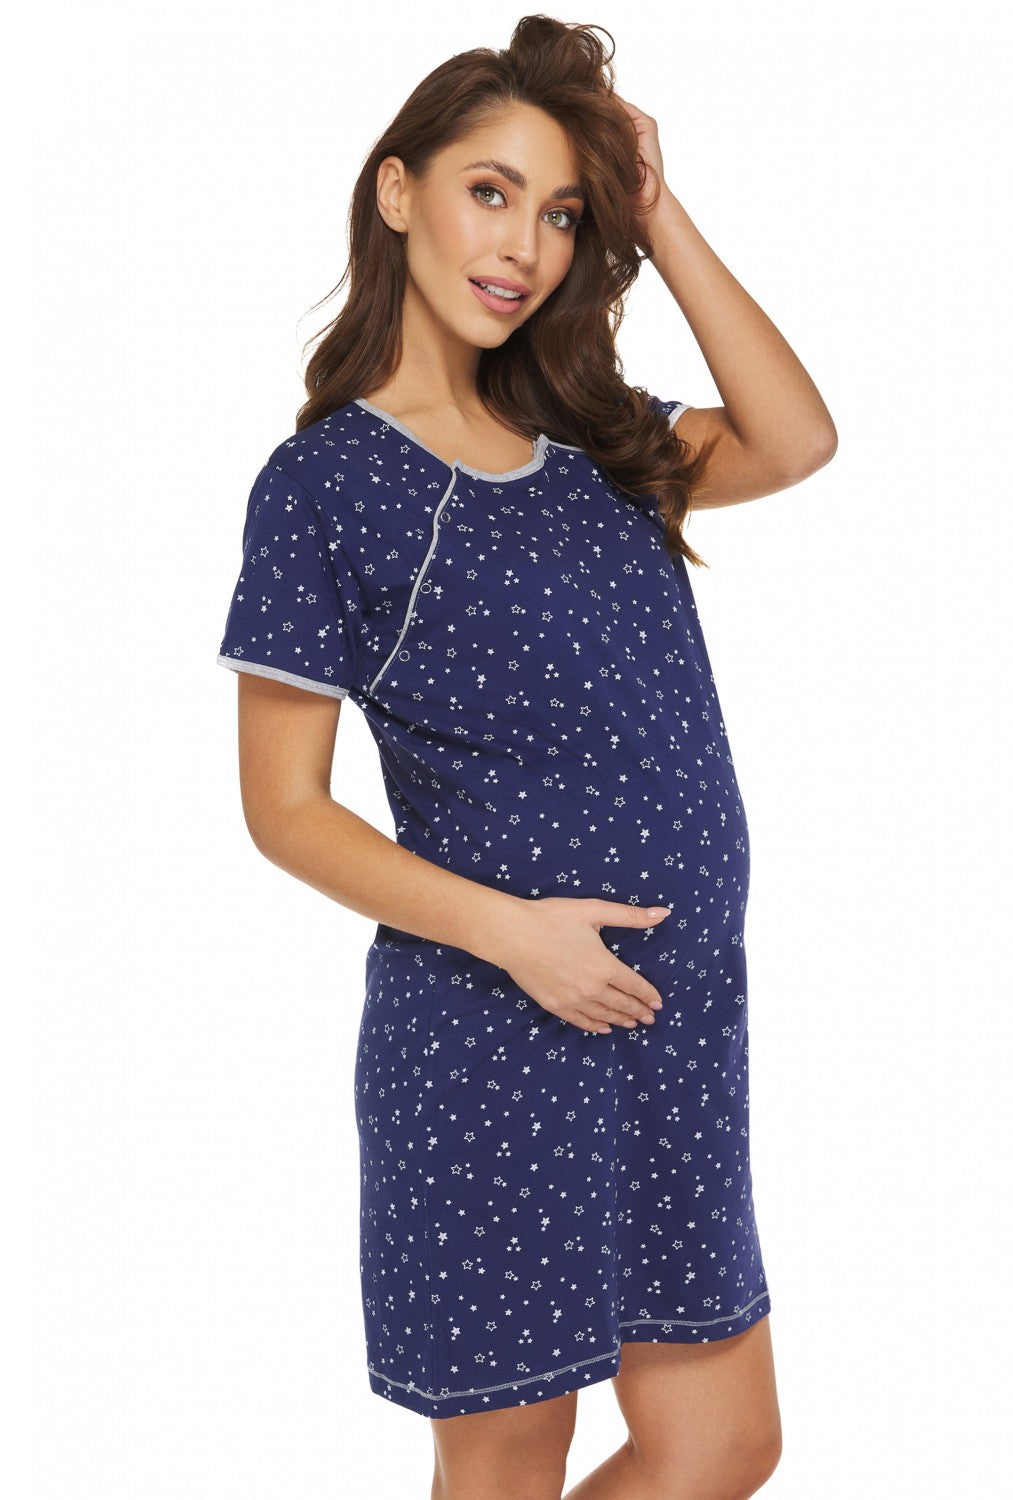 Maternity Nursing Star Print Nightdress